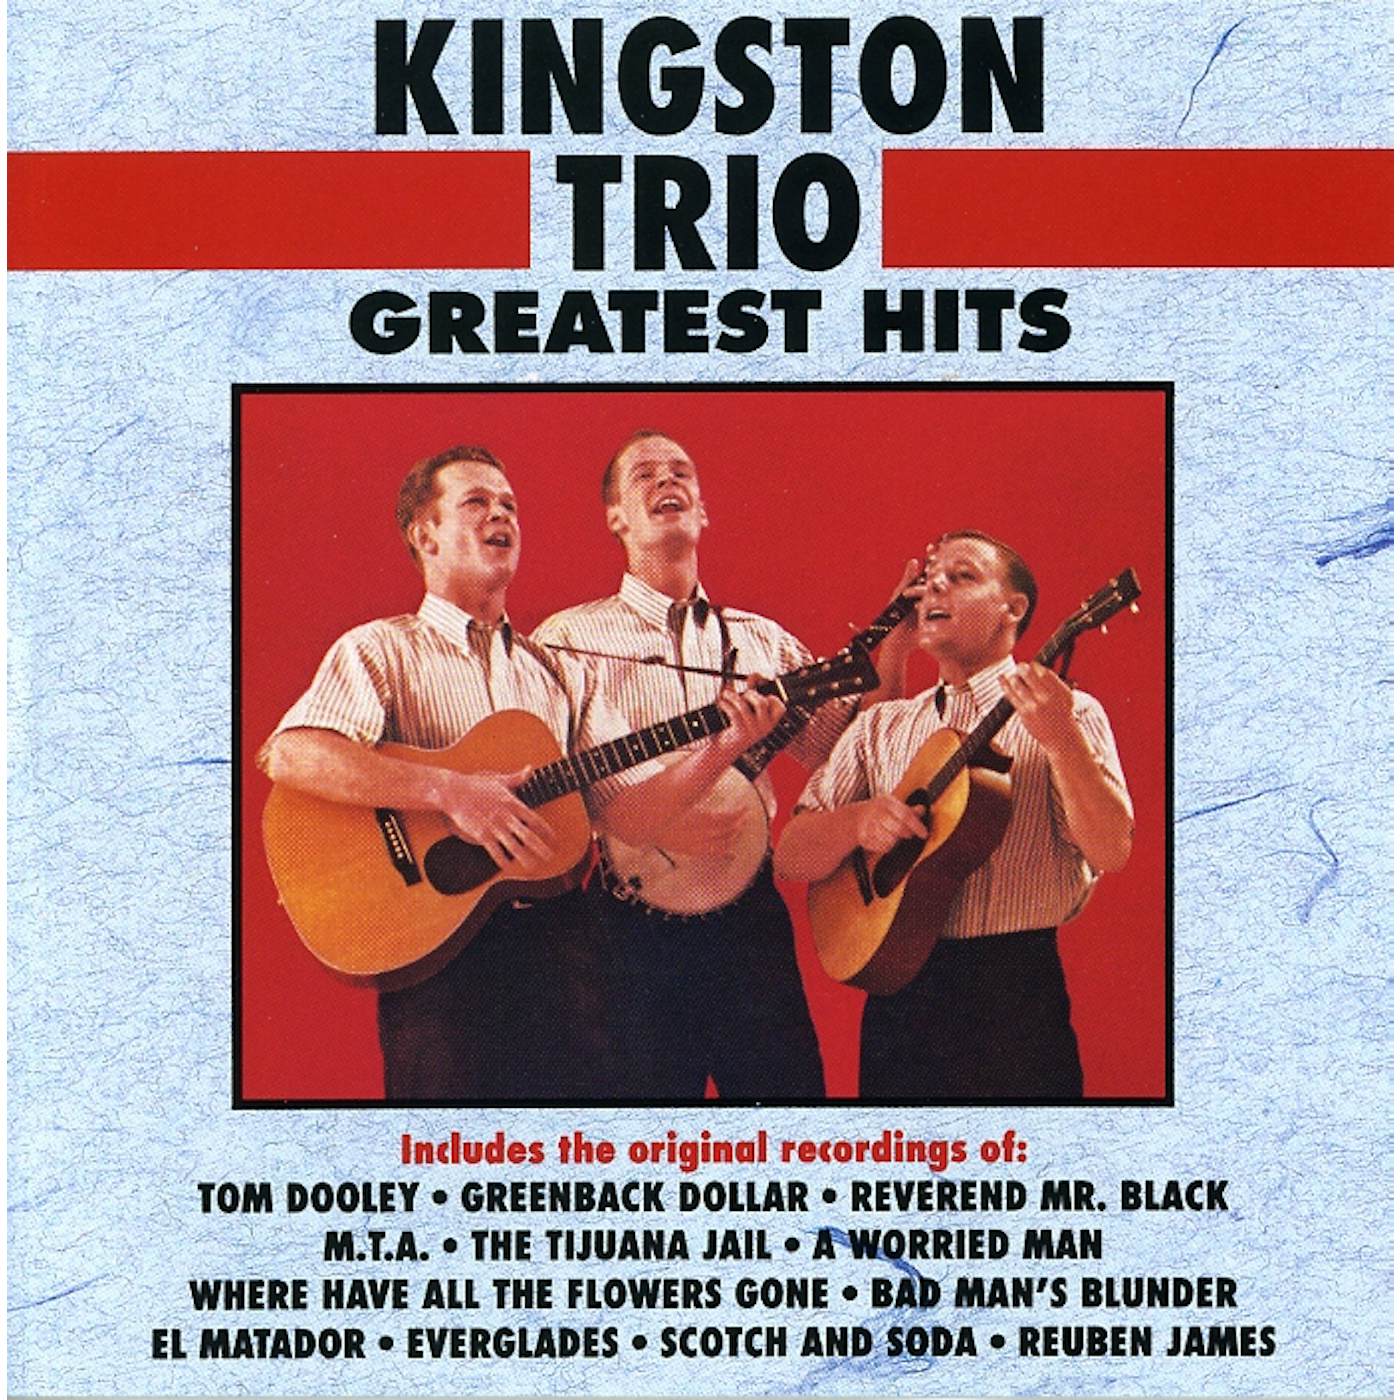 The Kingston Trio GREATEST HITS CD